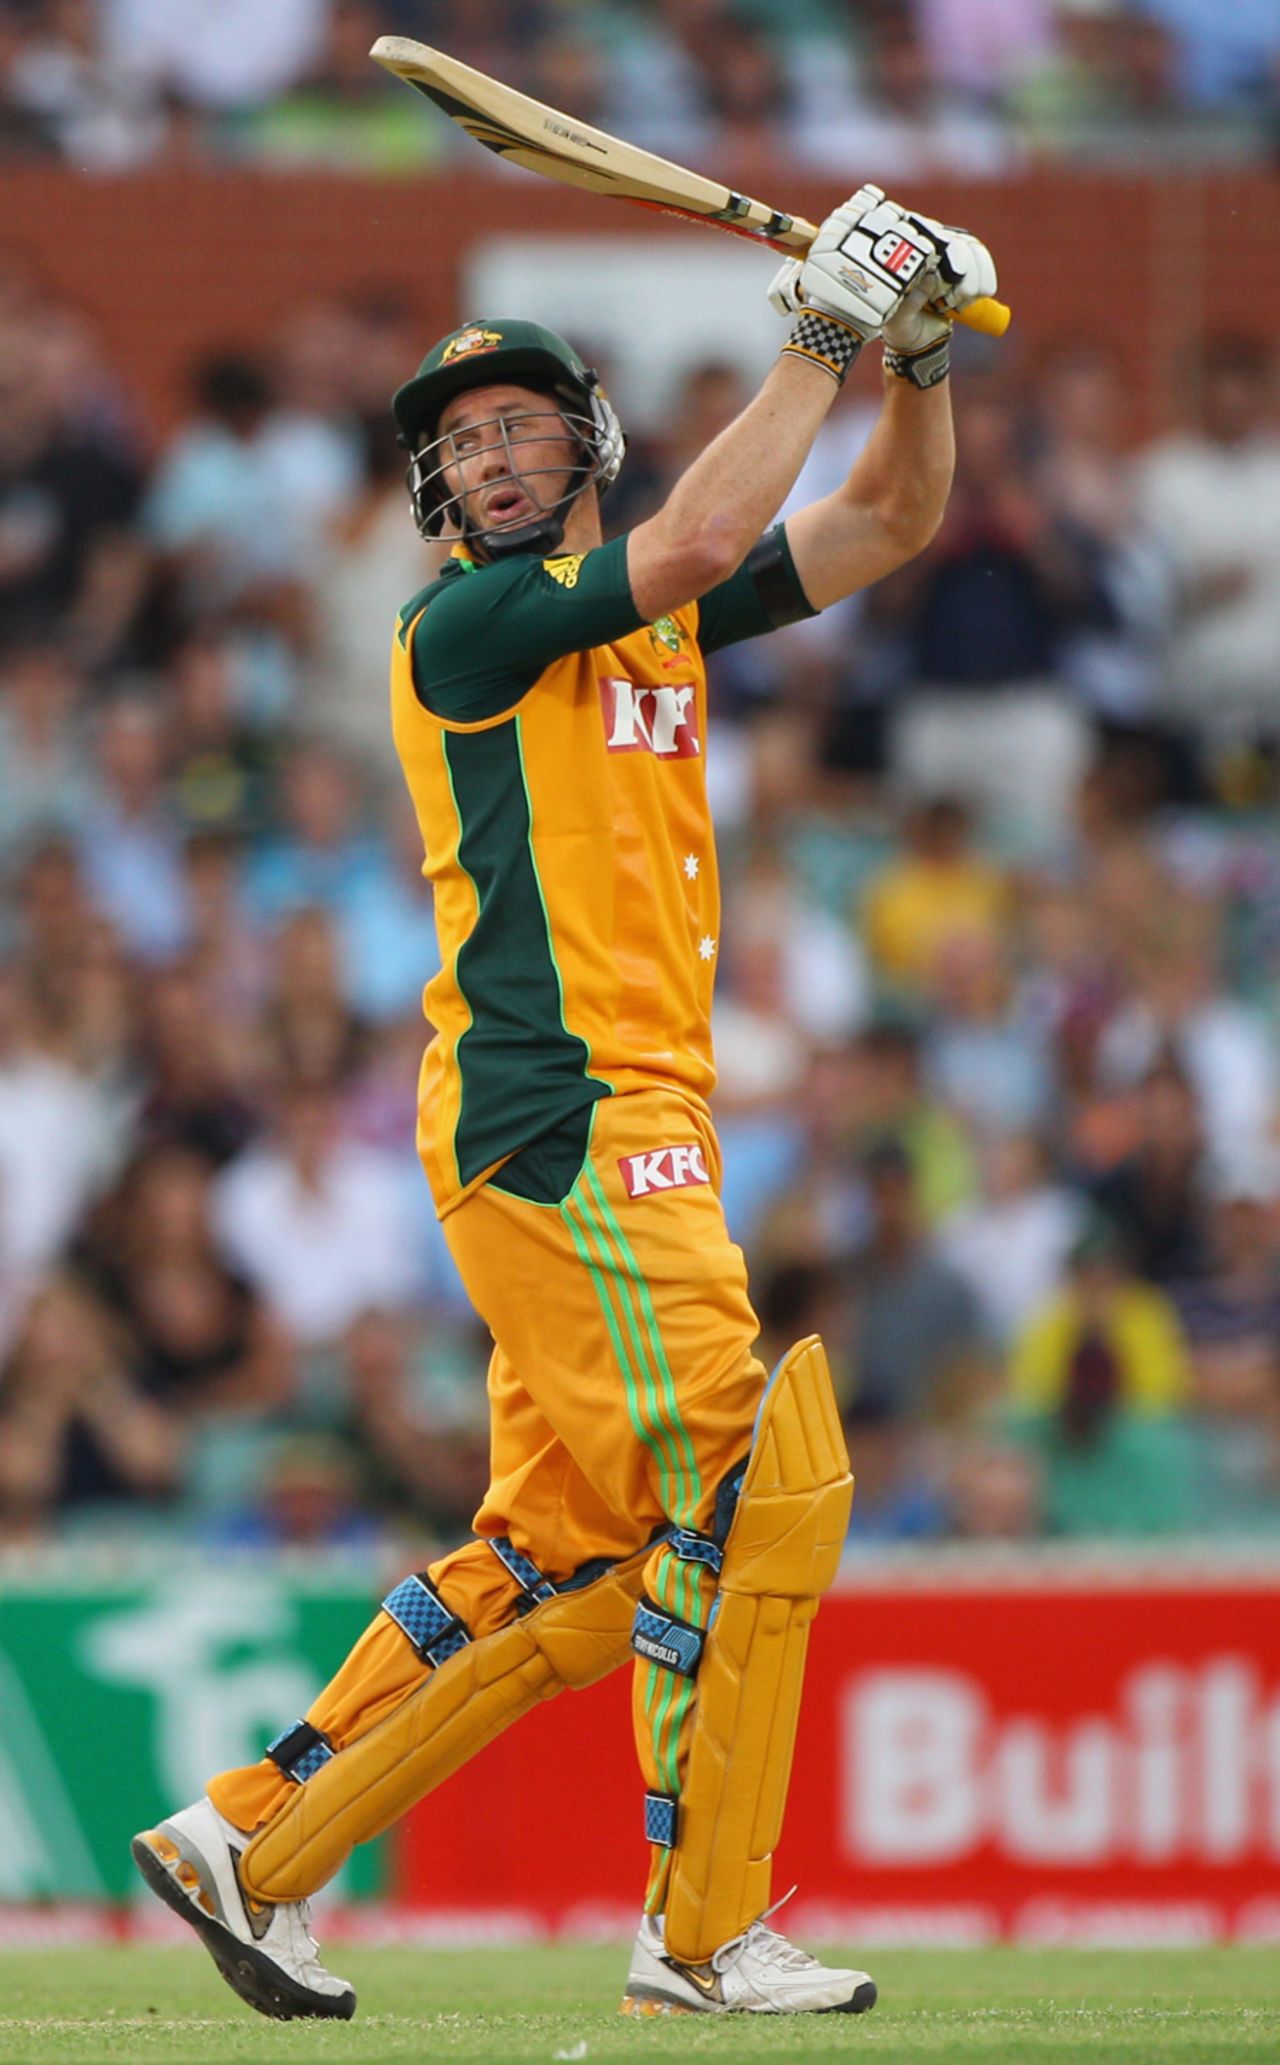 David Hussey added a promising 28 before he was bowled, Australia v England, 1st Twenty20, Adelaide, January 12, 2011